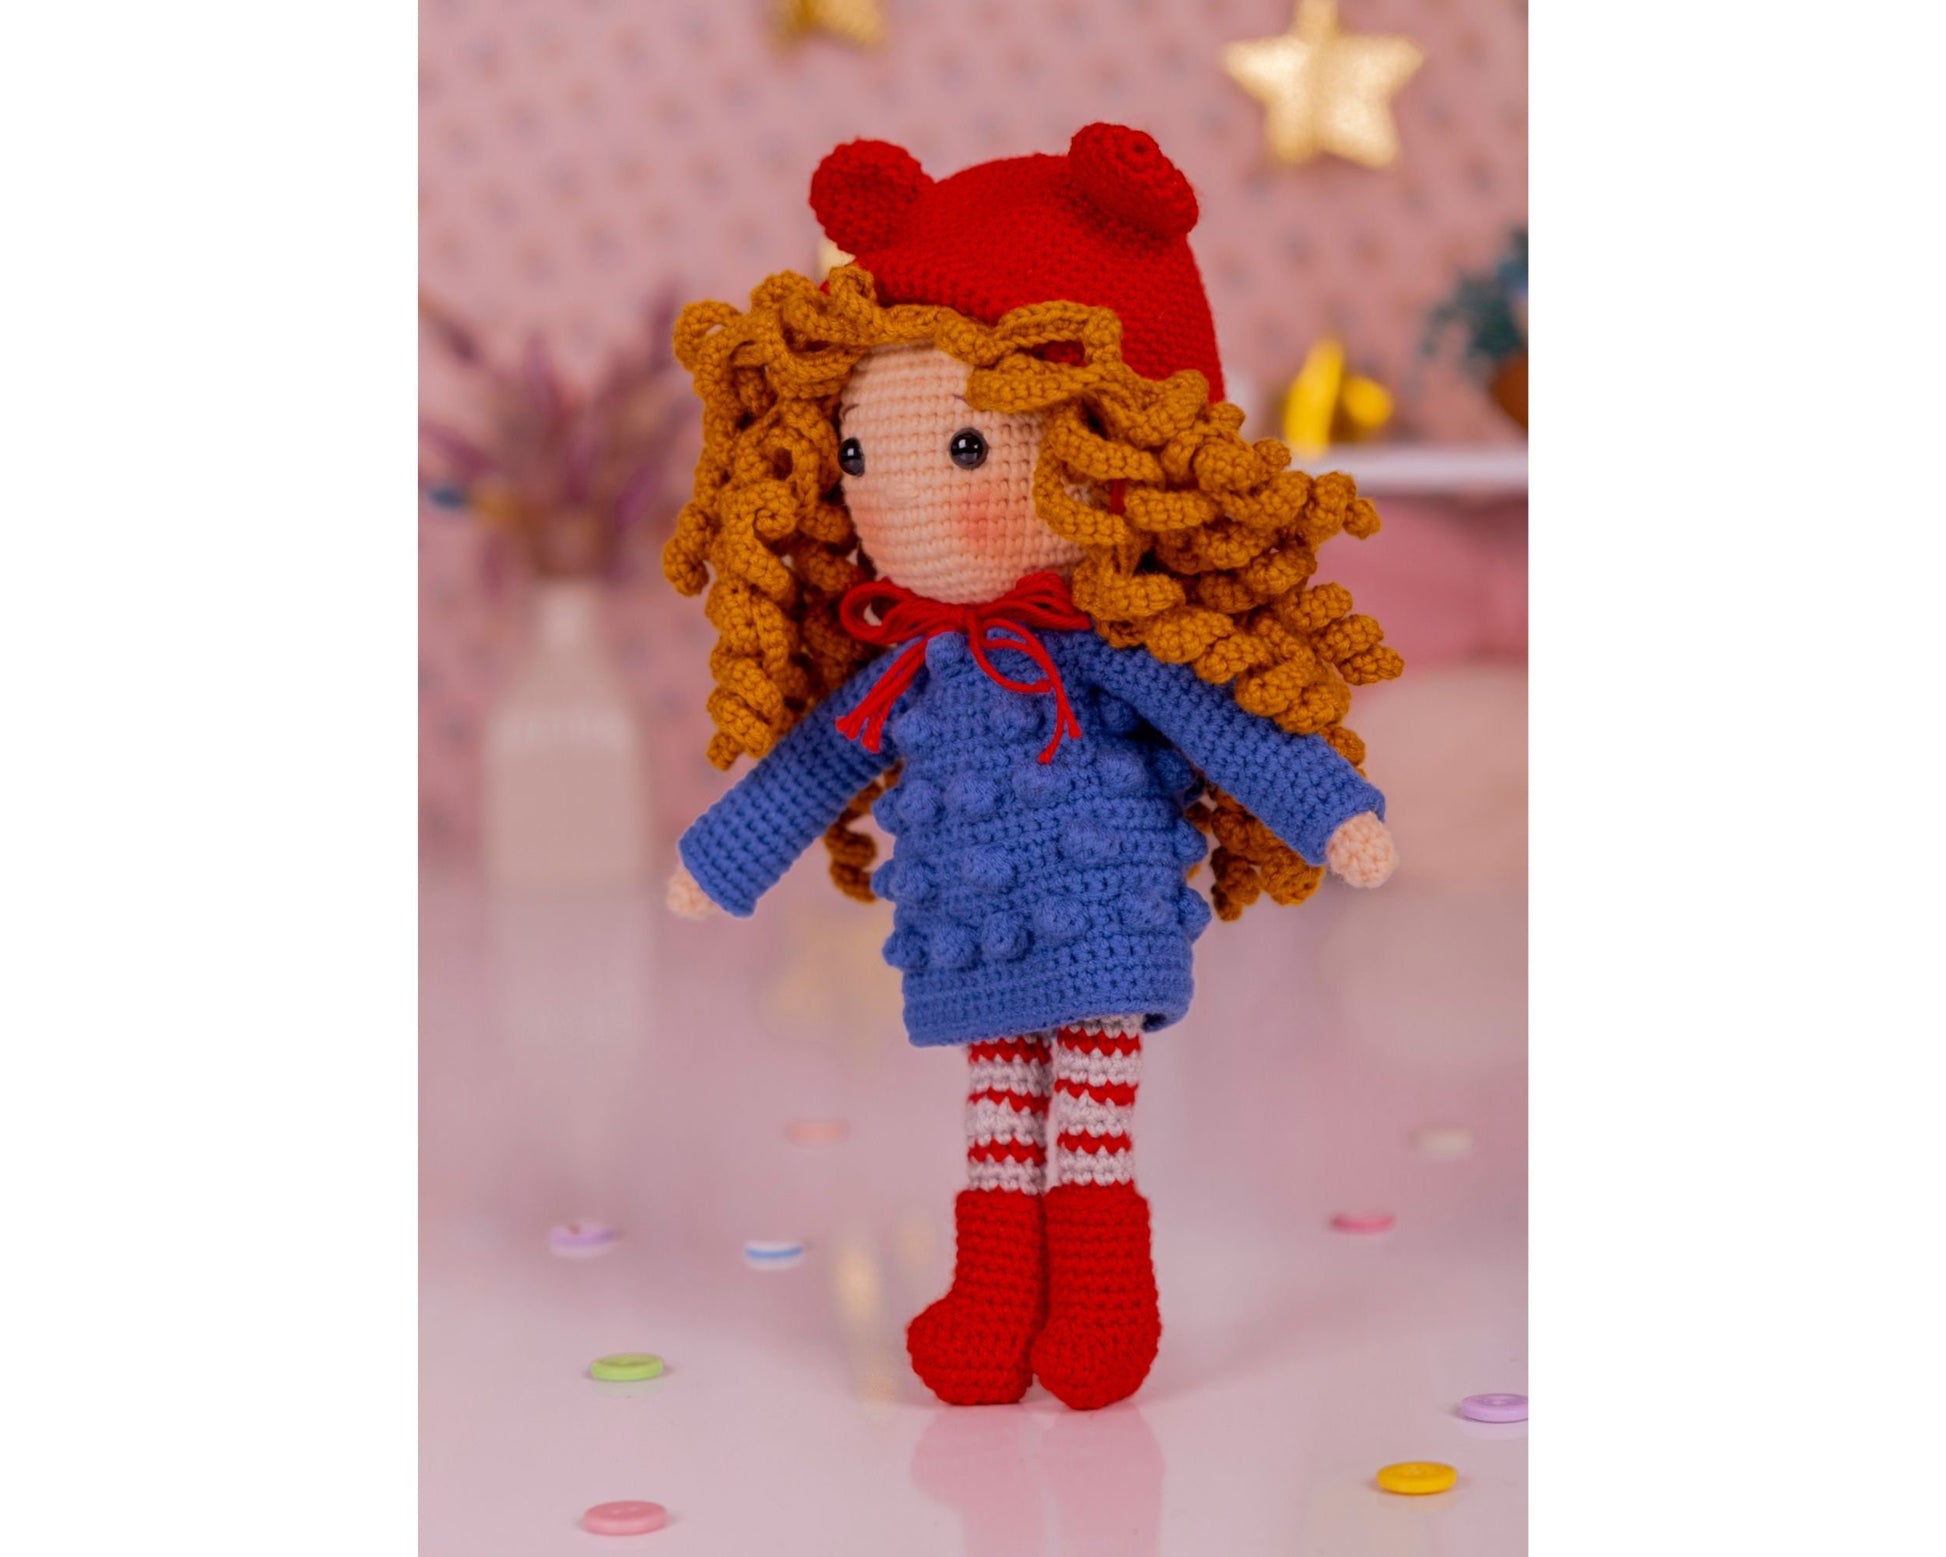 Curly Hair Doll, Crochet Doll, Amigurumi Doll, Granddaughter Gift, Daughter Gift, Christmas Doll, Handmade Doll, Knitted Dolls, Stuffed Doll